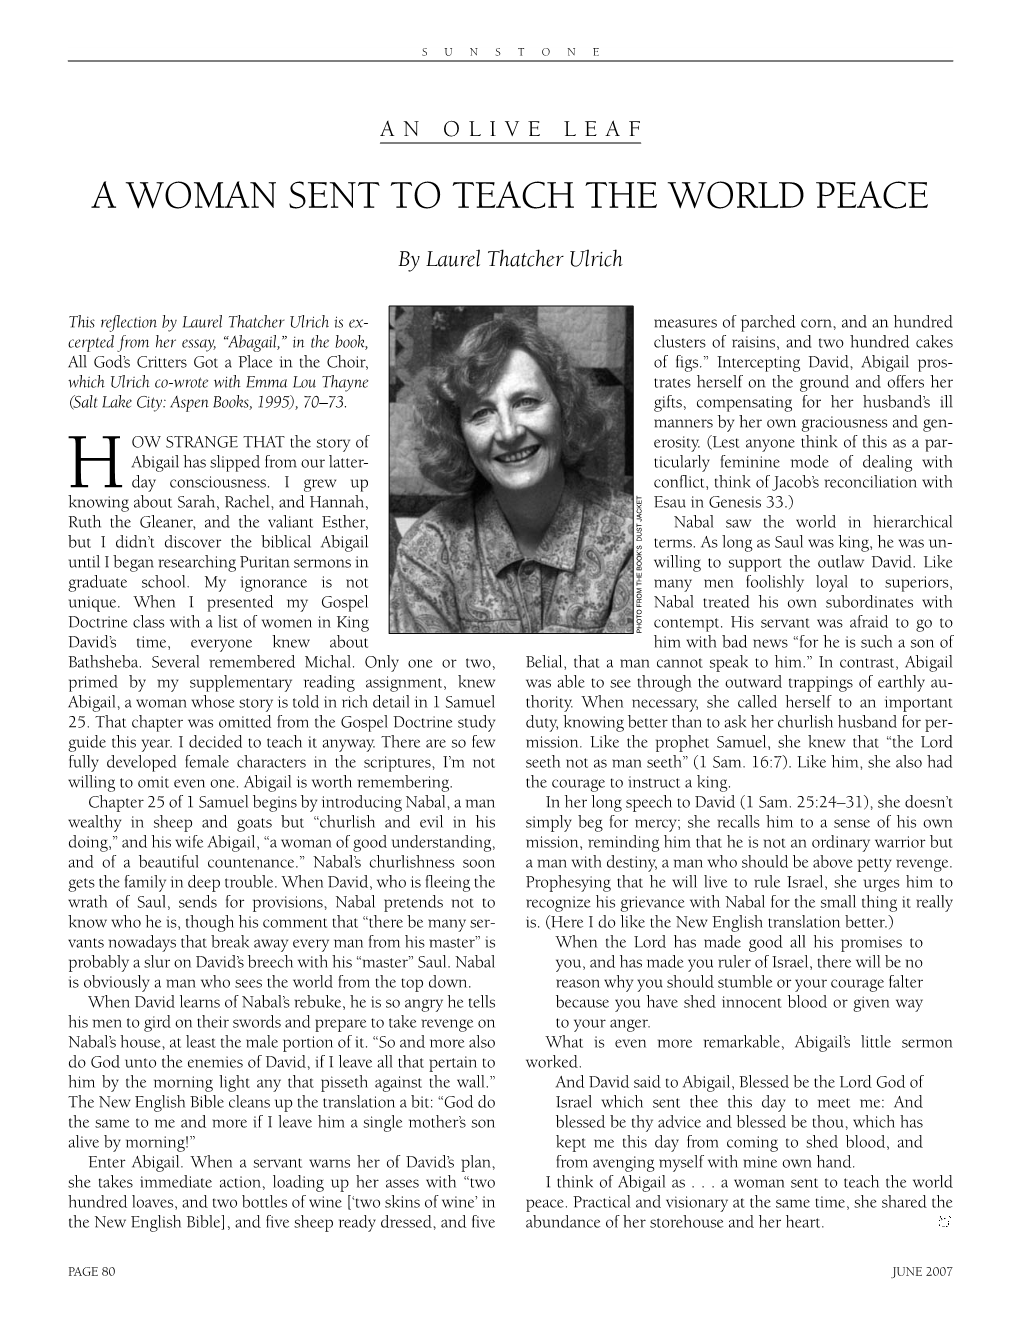 A Woman Sent to Teach the World Peace